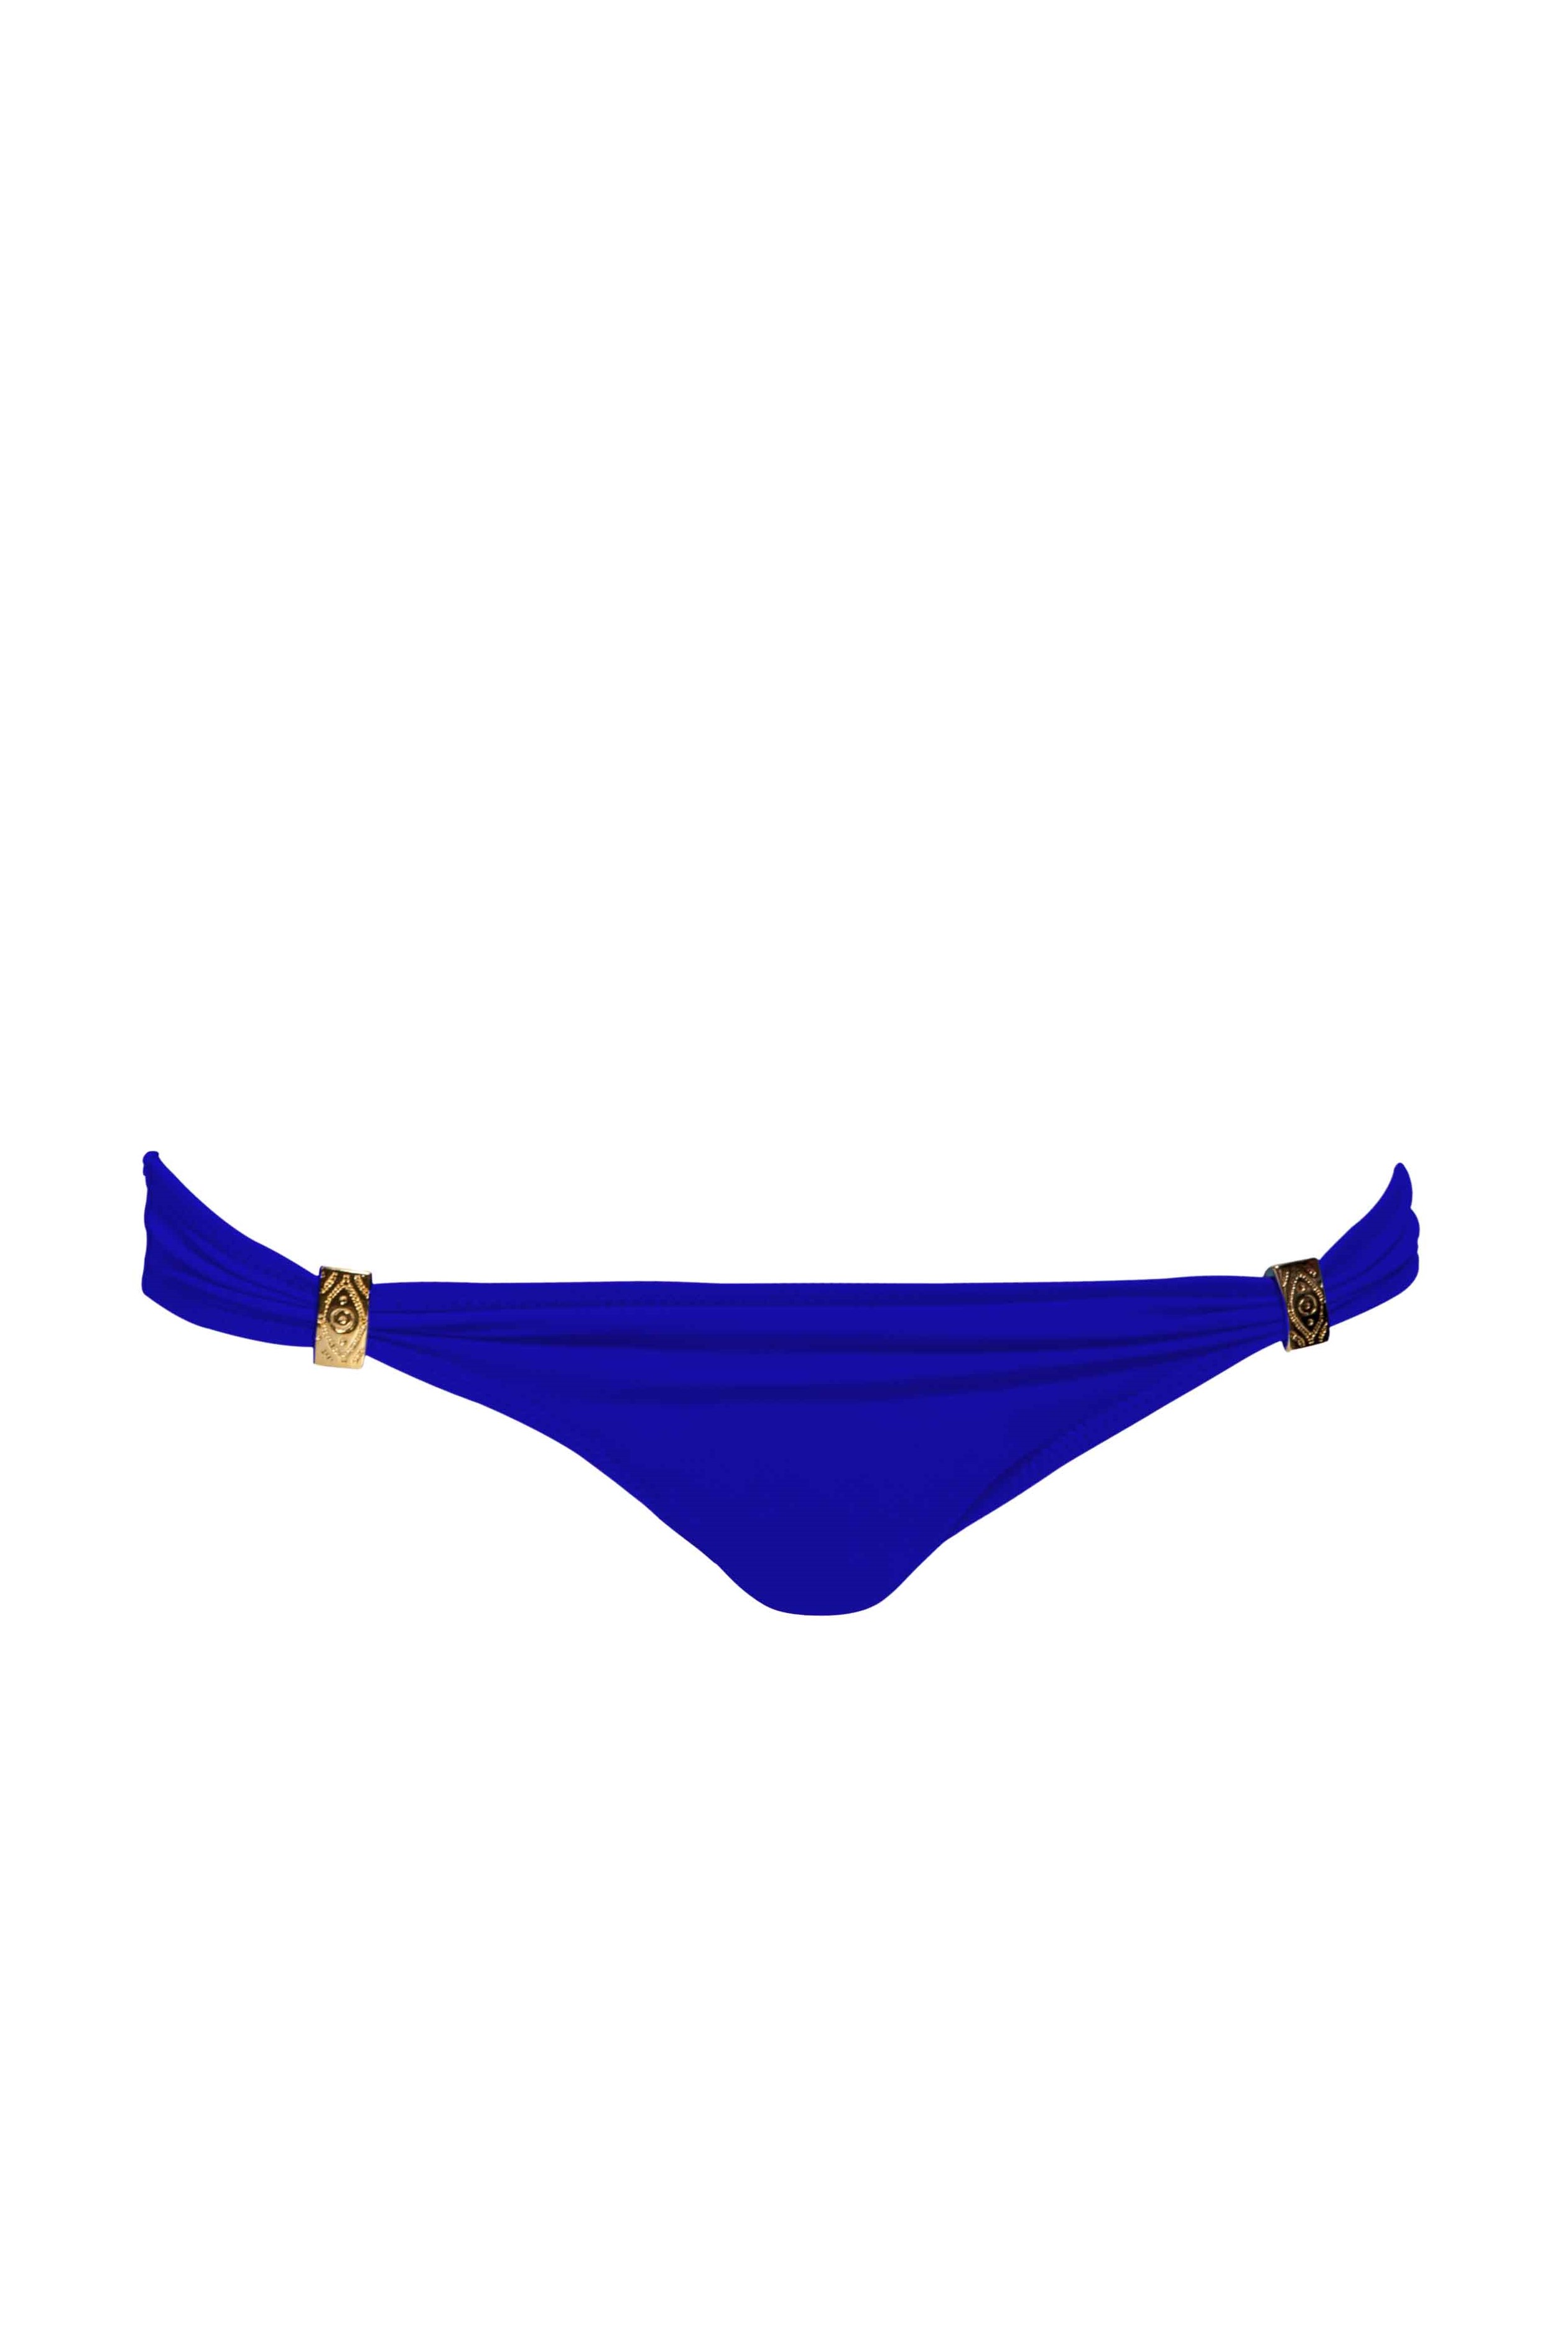 Phax Kobalt Blauw Intermedium Bikini Broekje